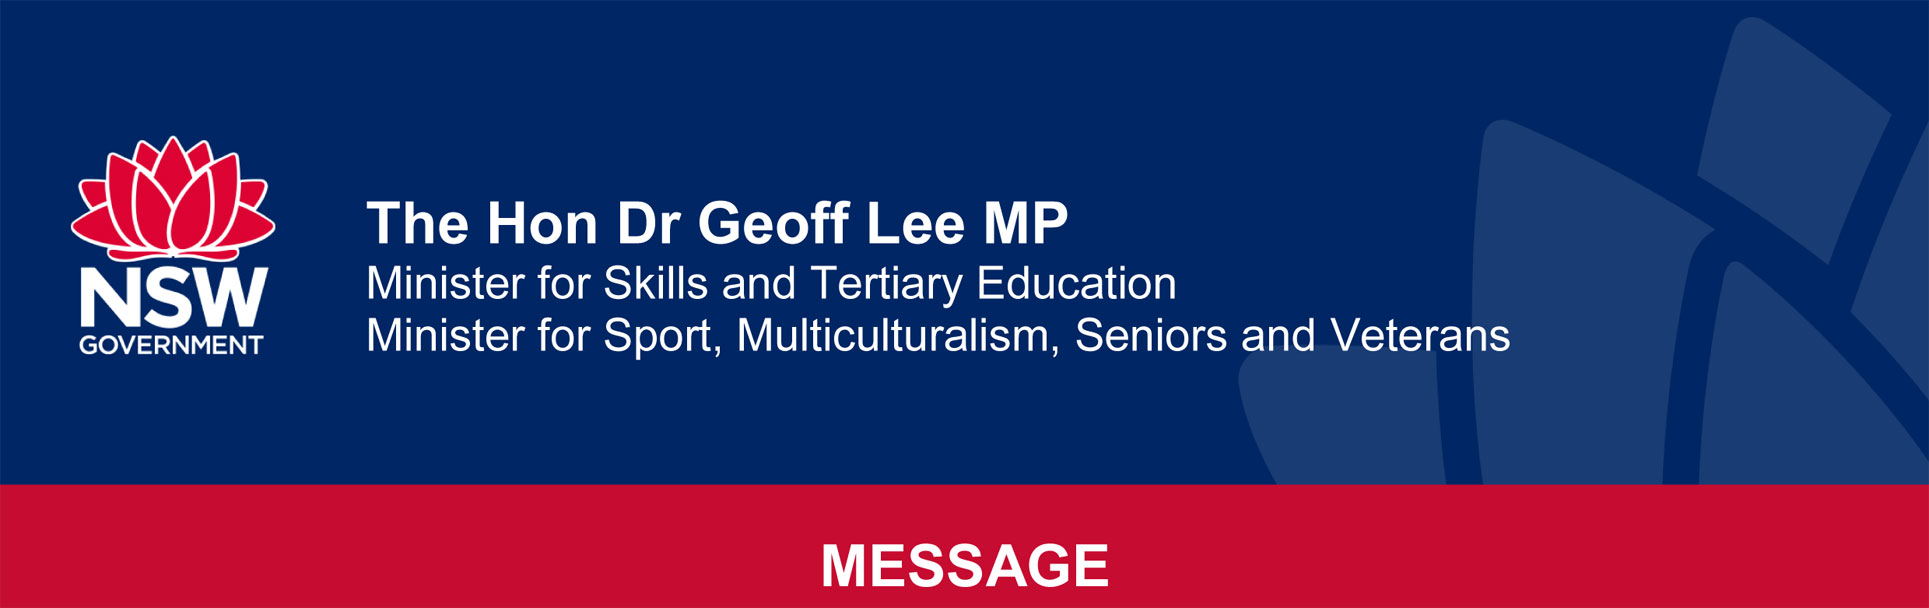 Dr Geoff Lee MP